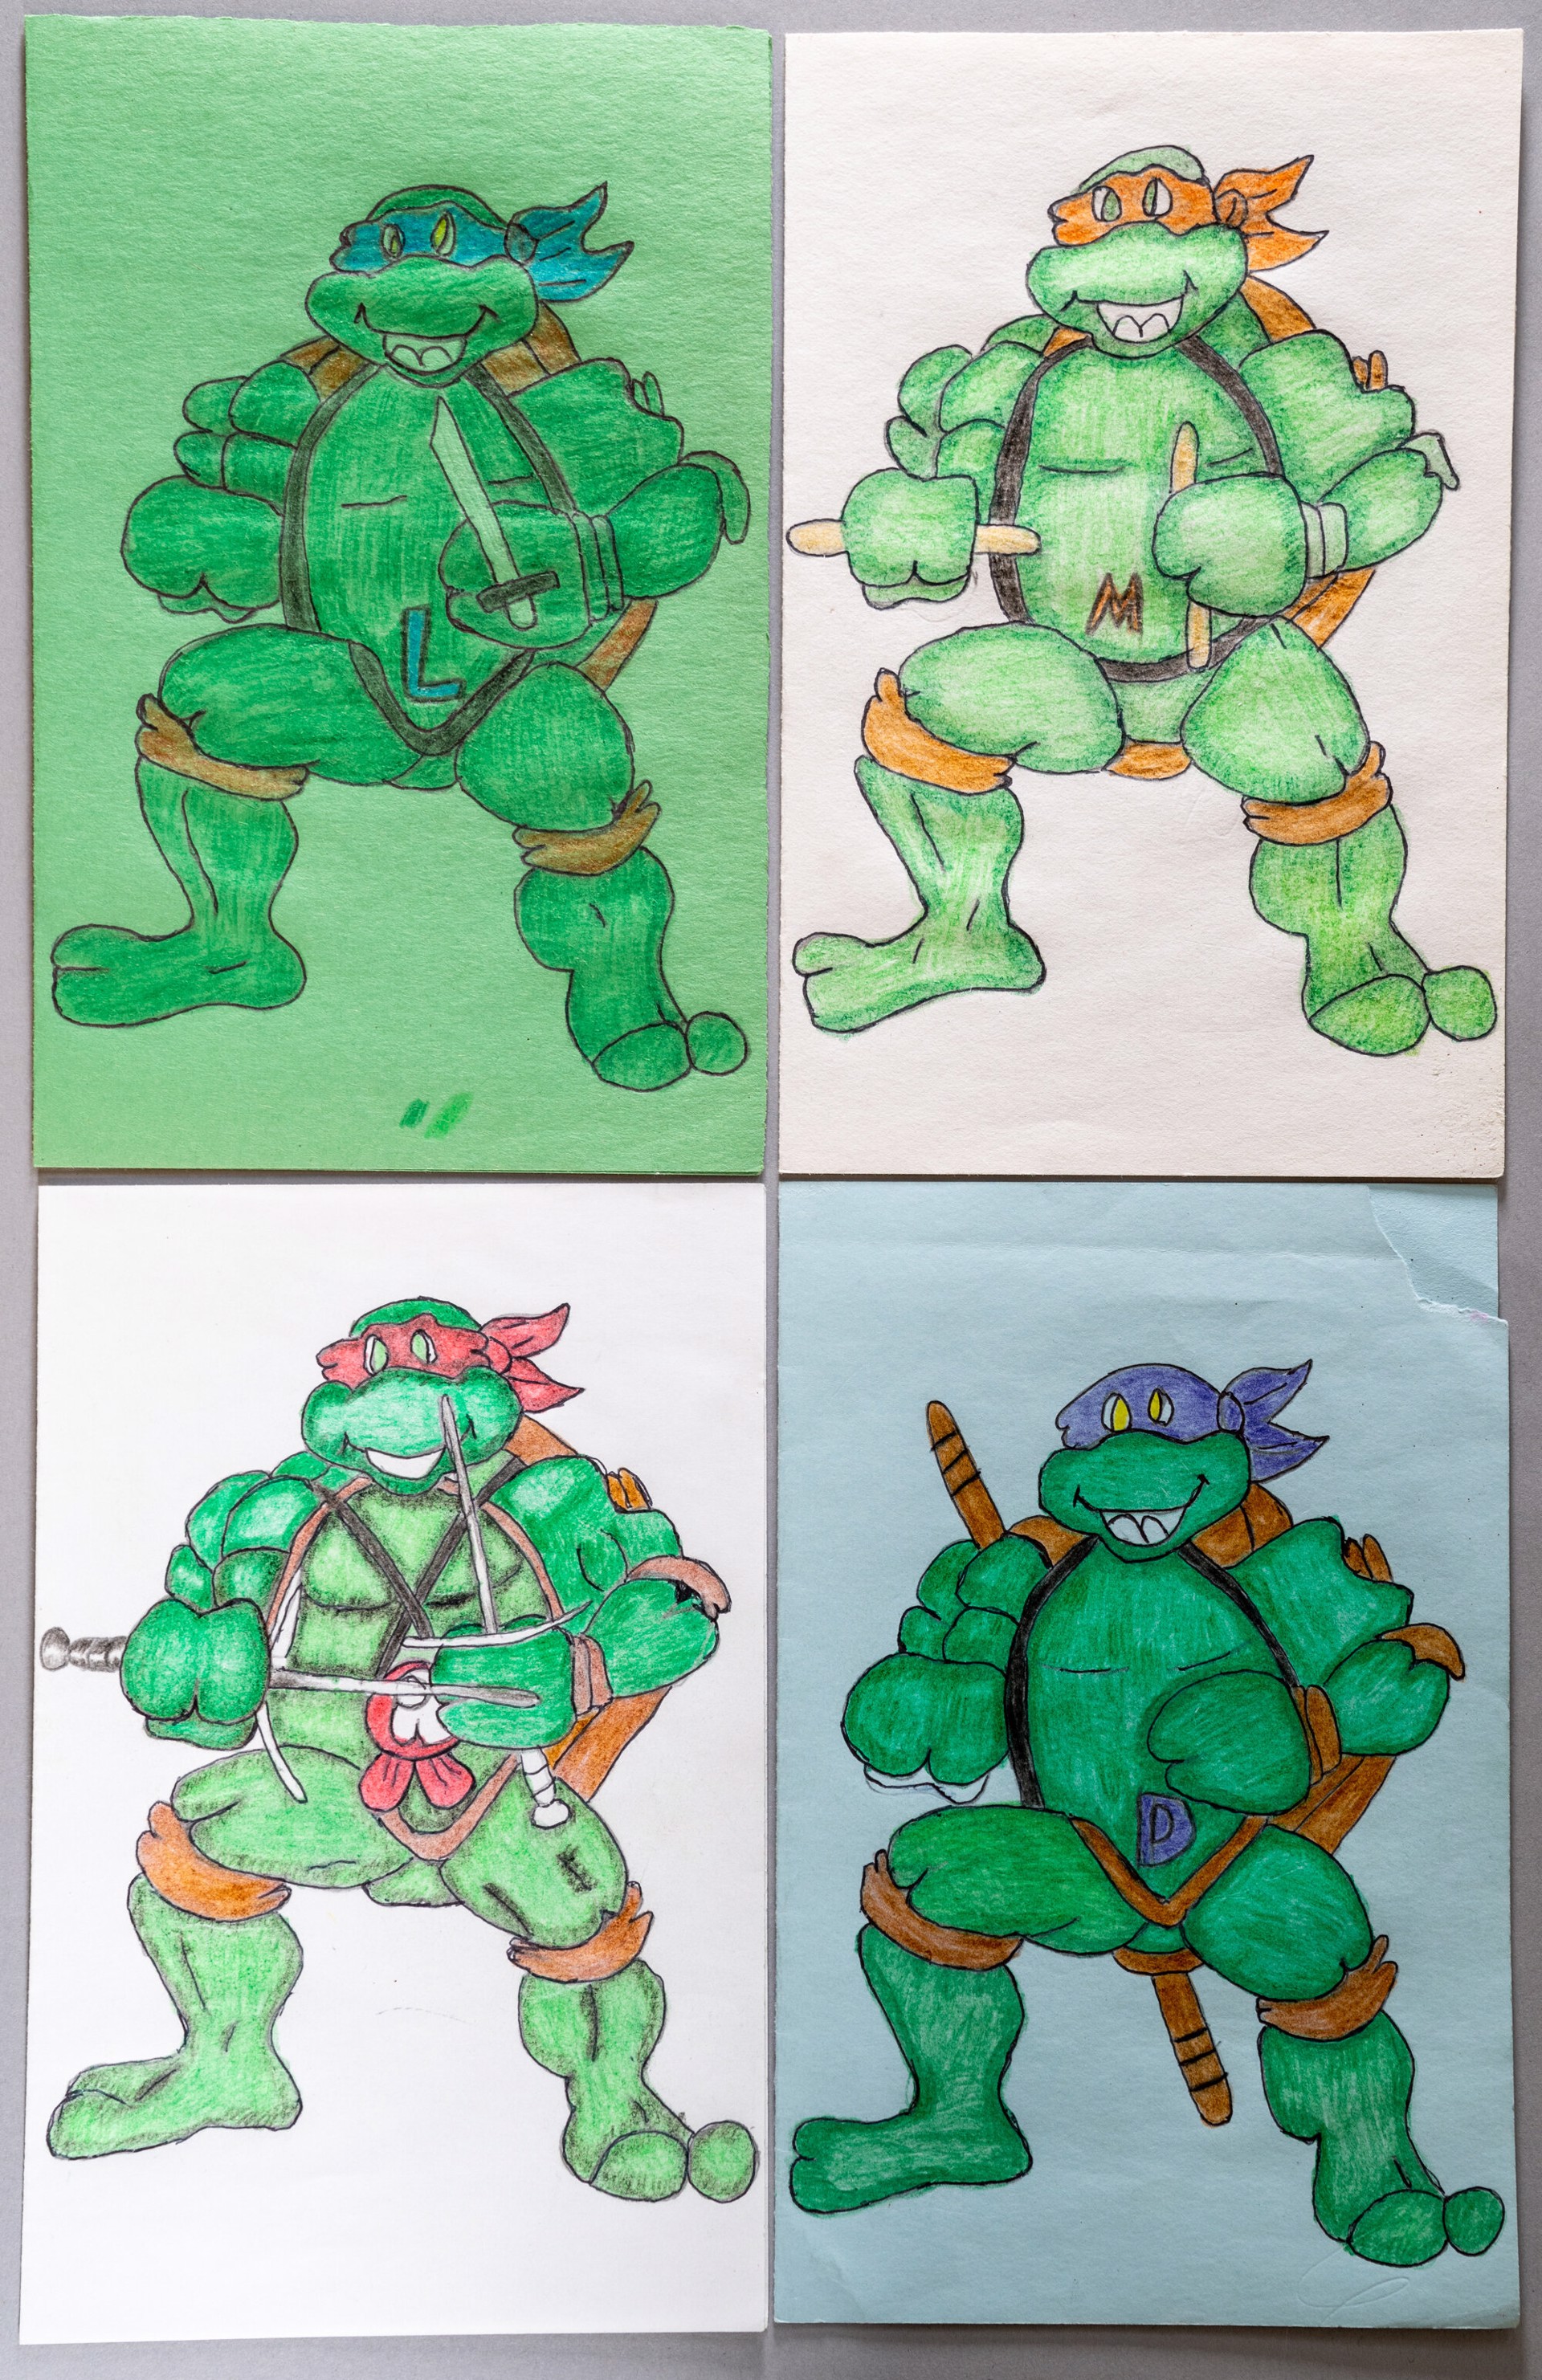 All 4 Ninja Turtles by C.B.